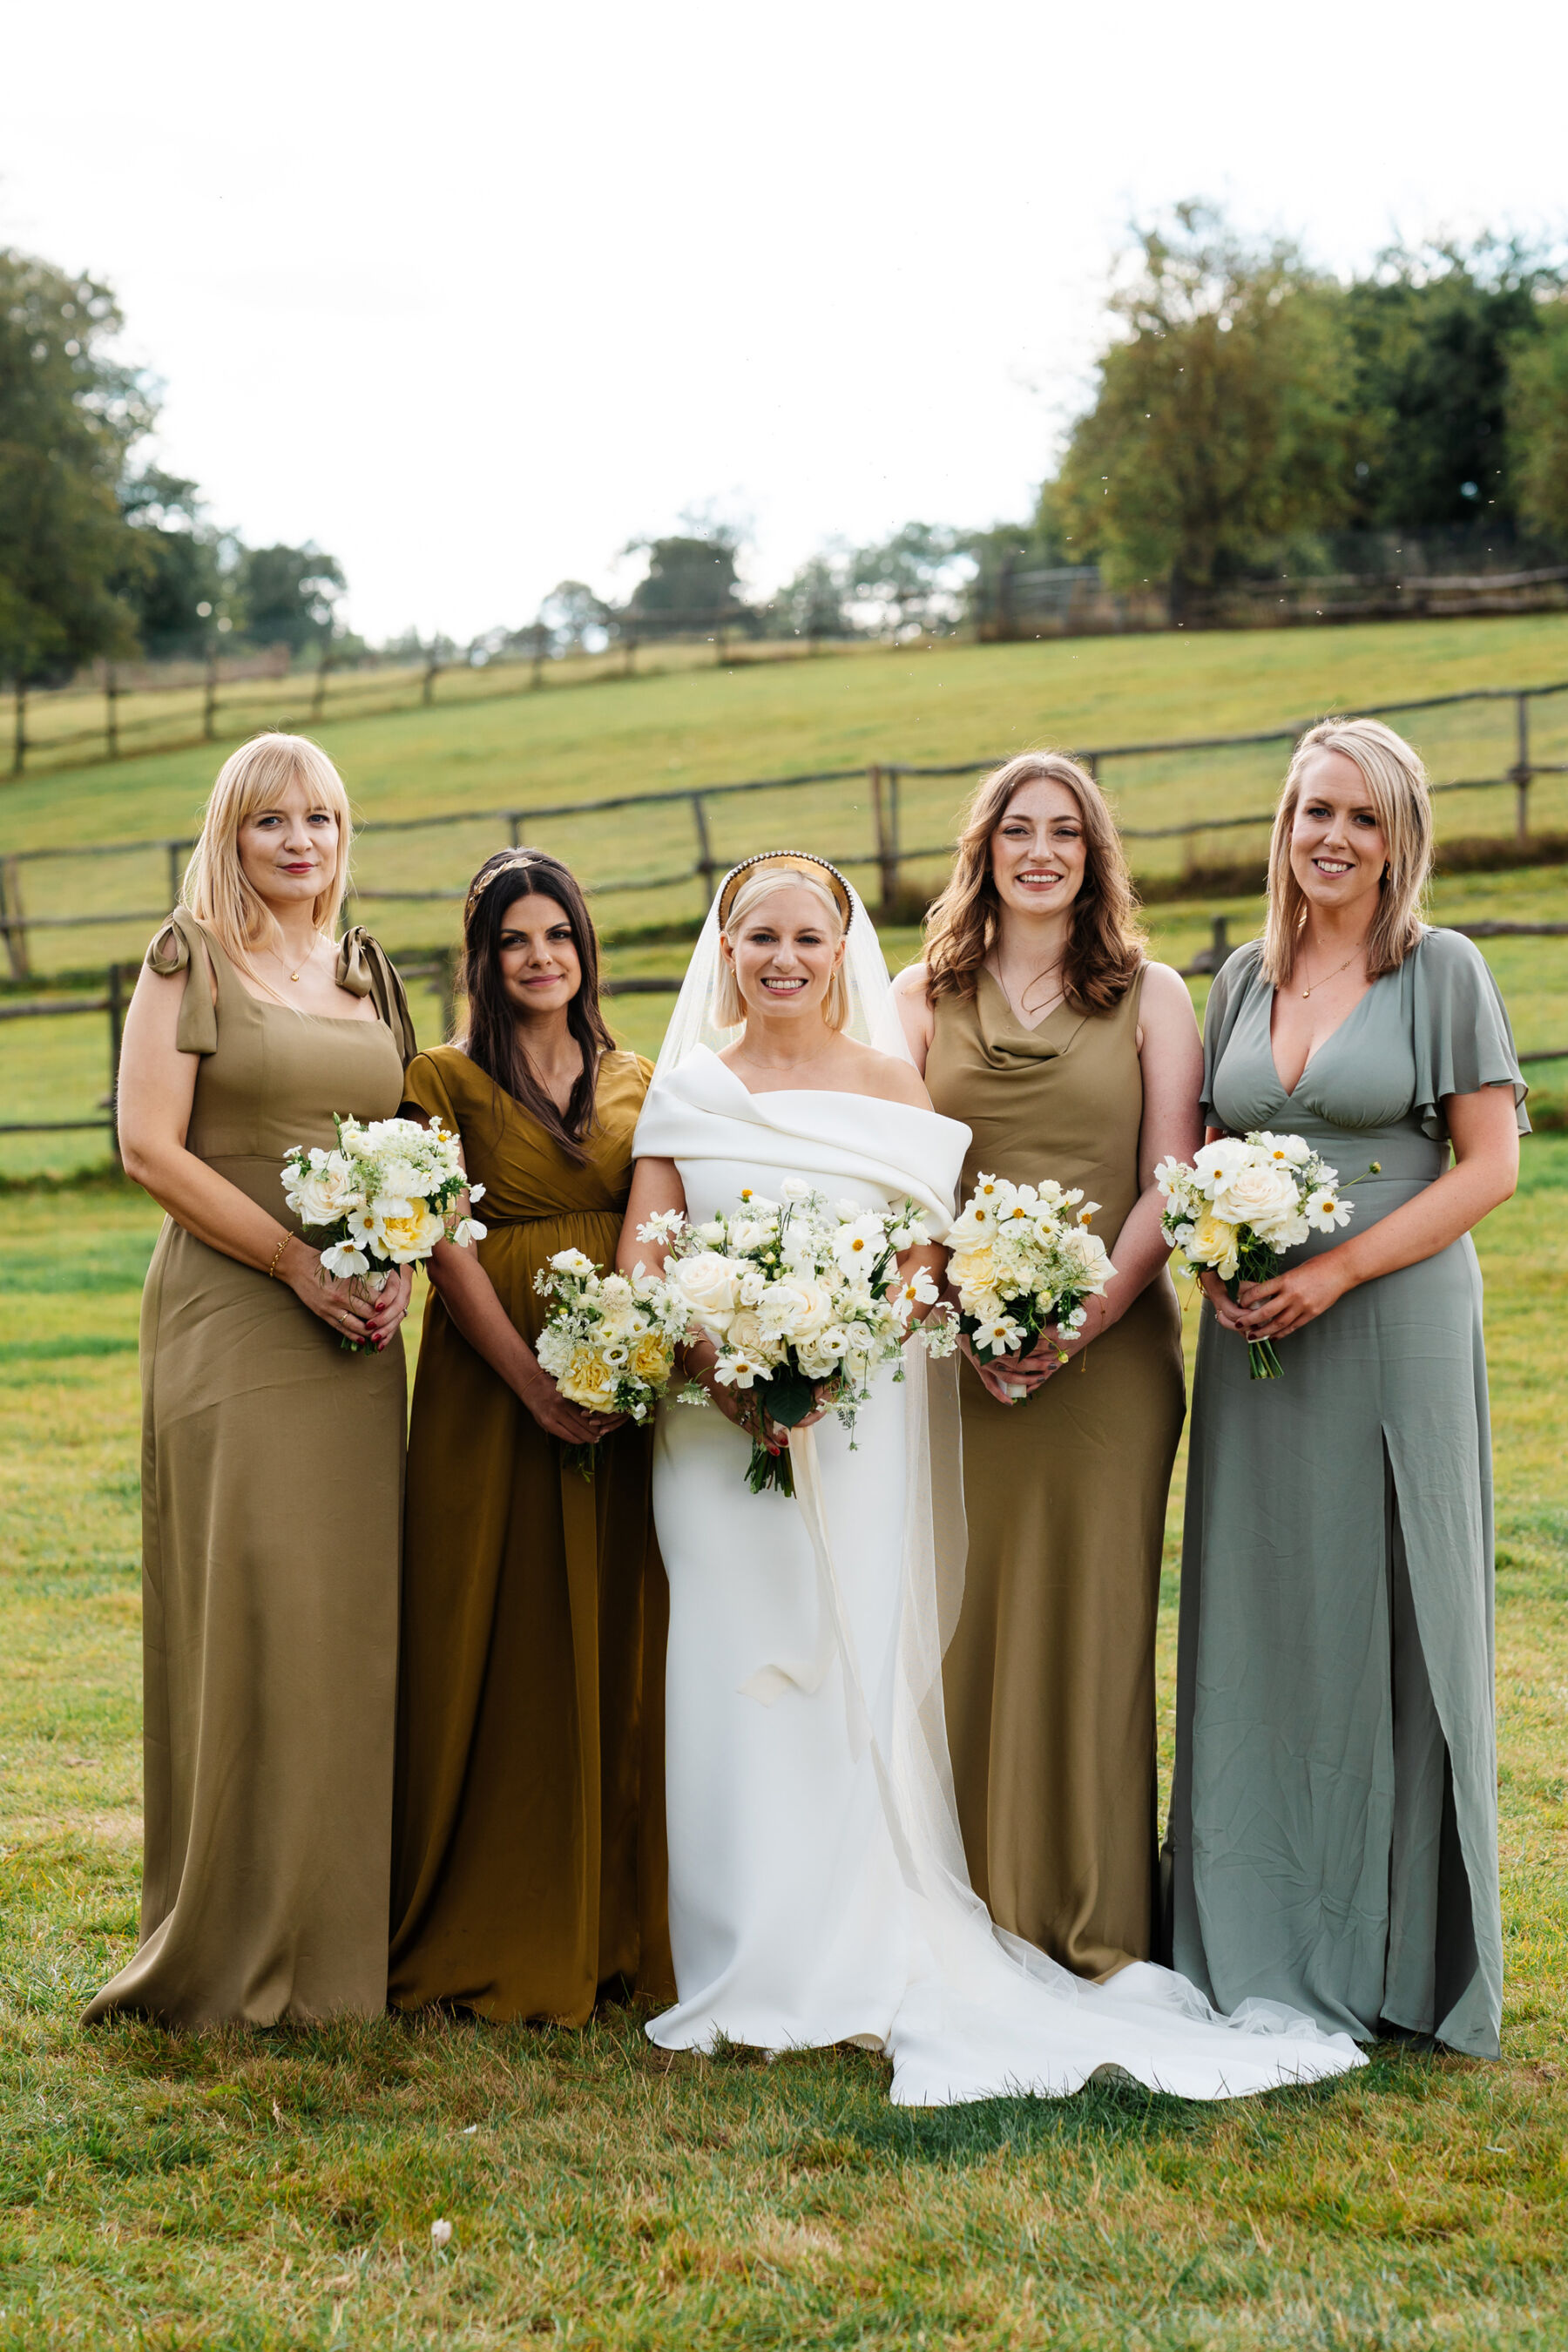 Modern bride wearing a Toni Maticevski wedding dress. Bridesmaids in olive green dresses.